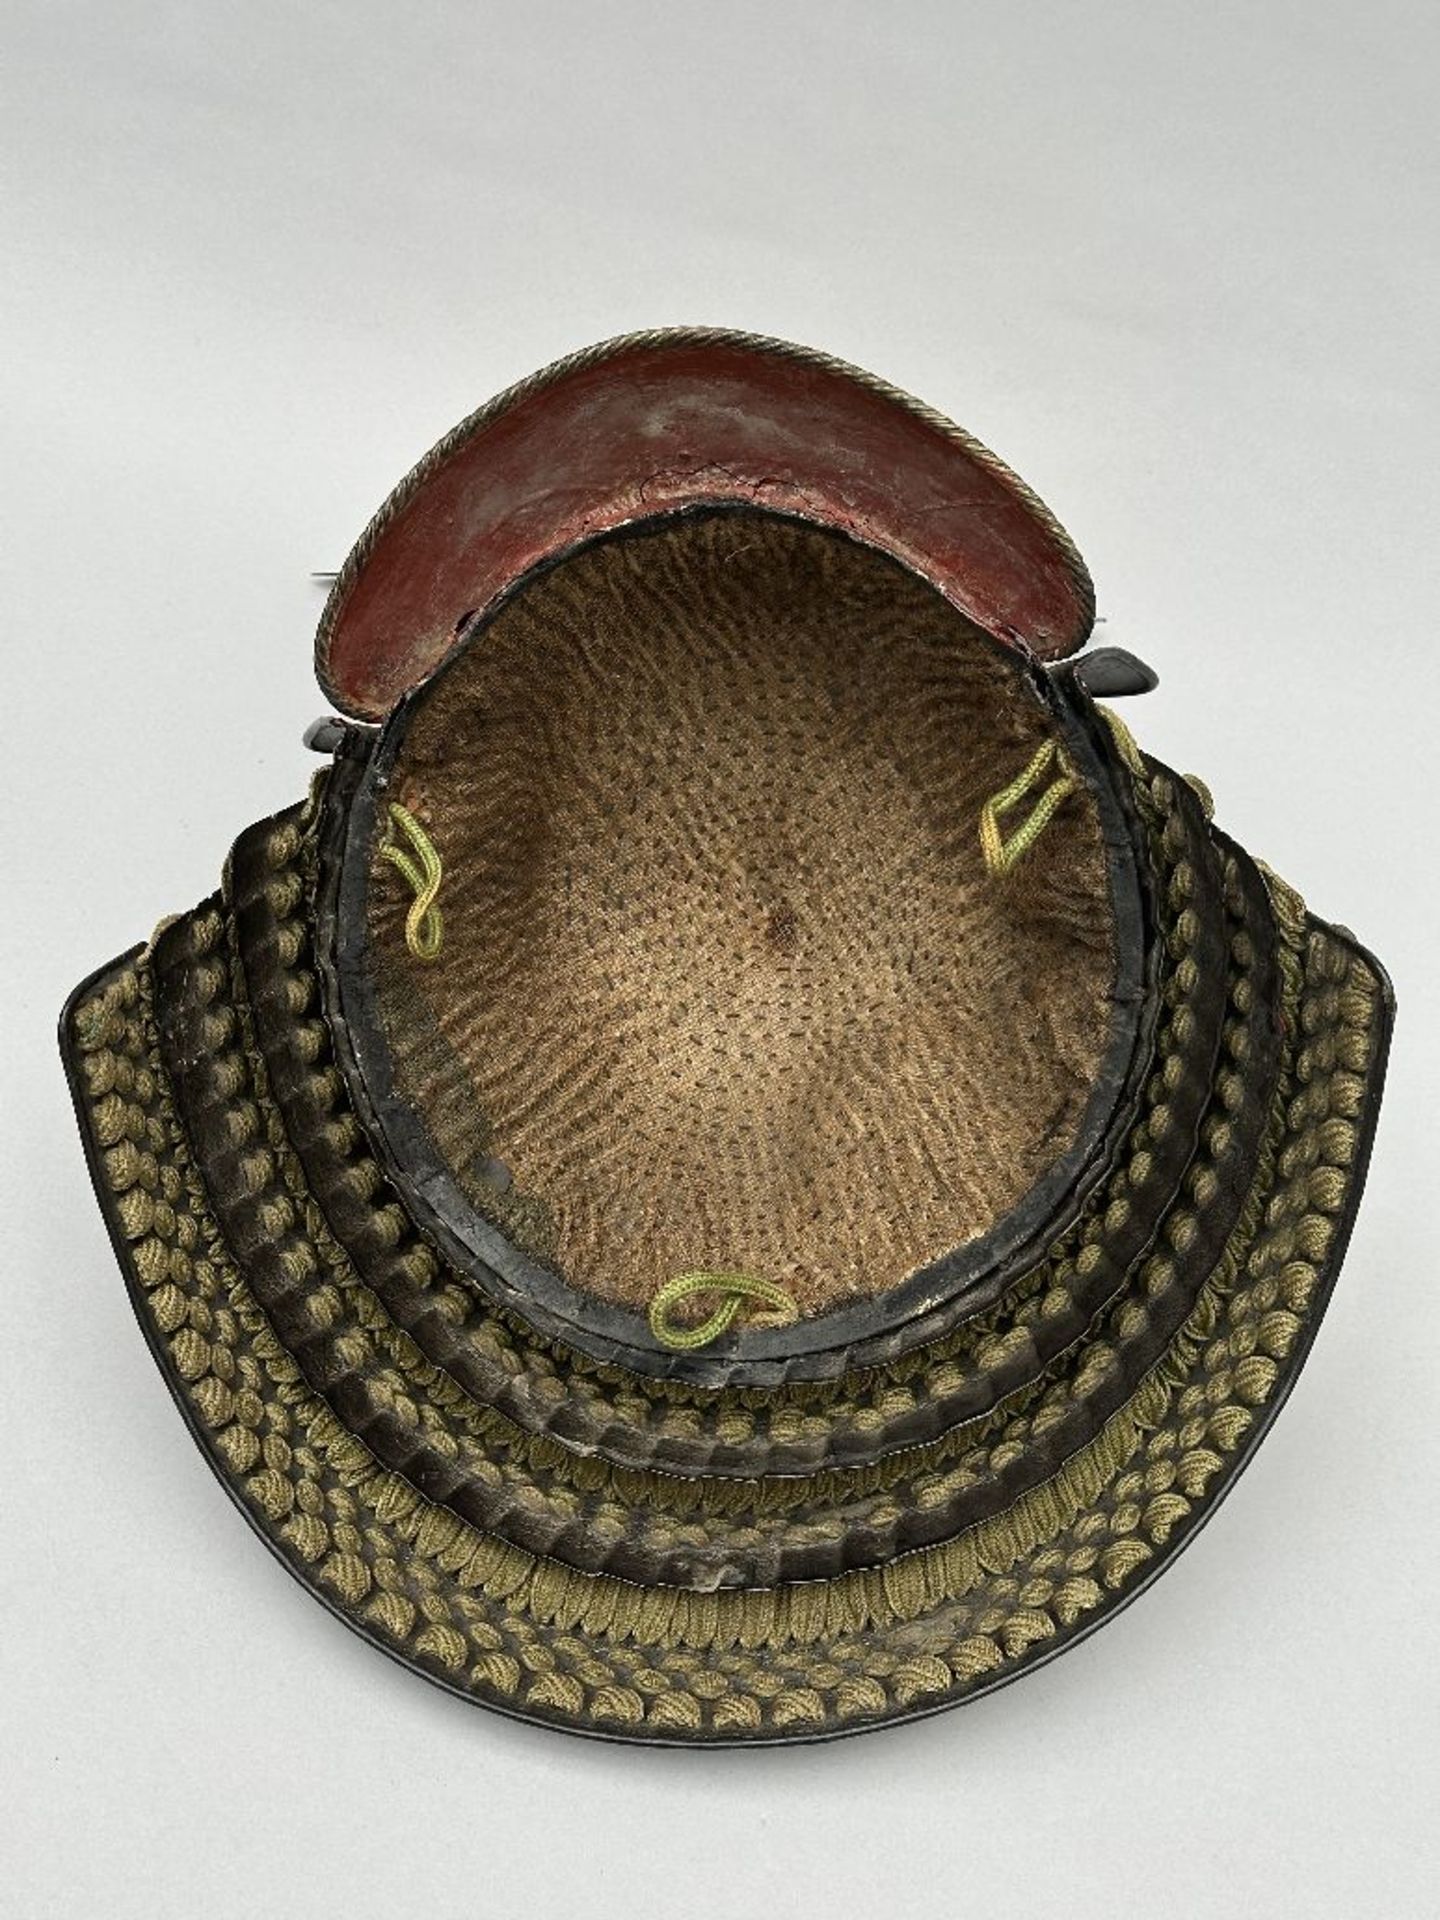 Japanese kabuto helmet - Image 4 of 6